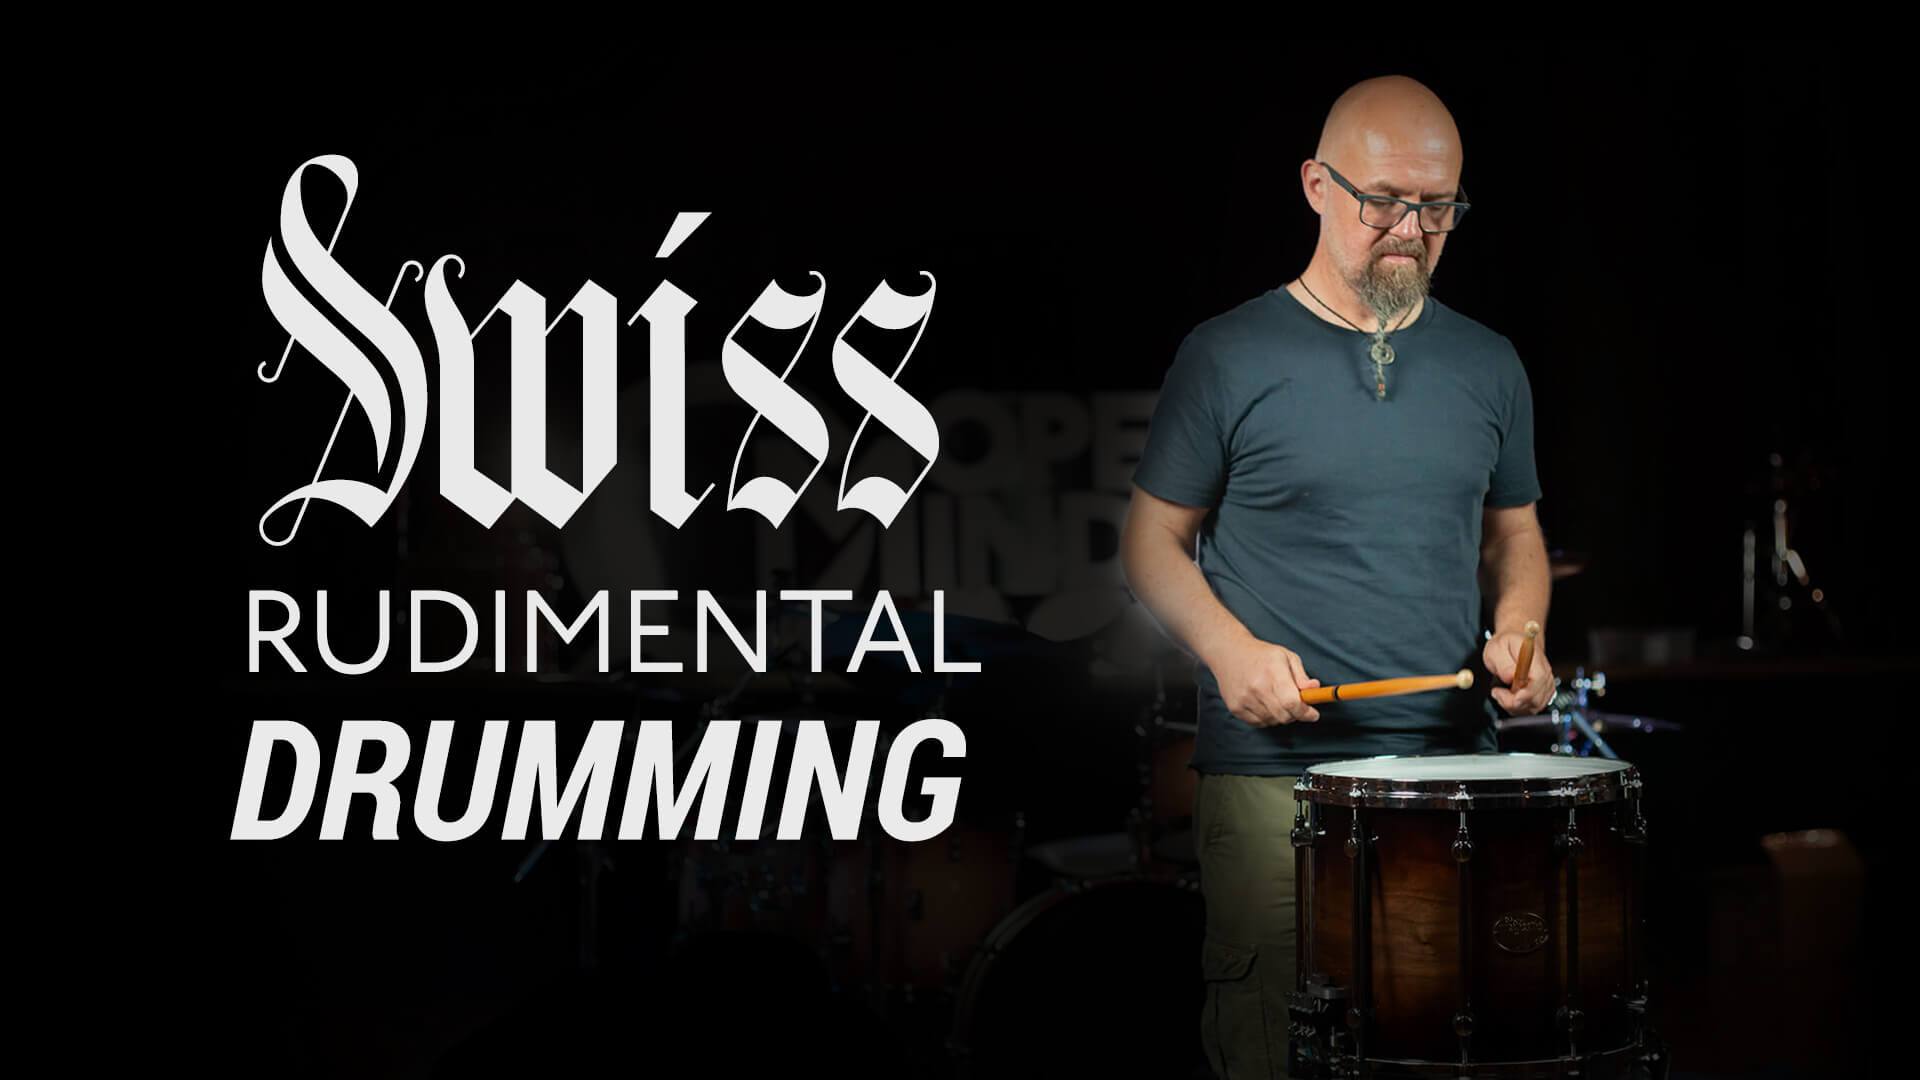 Master unique Swiss Rudimental Drumming with Claus Hessler